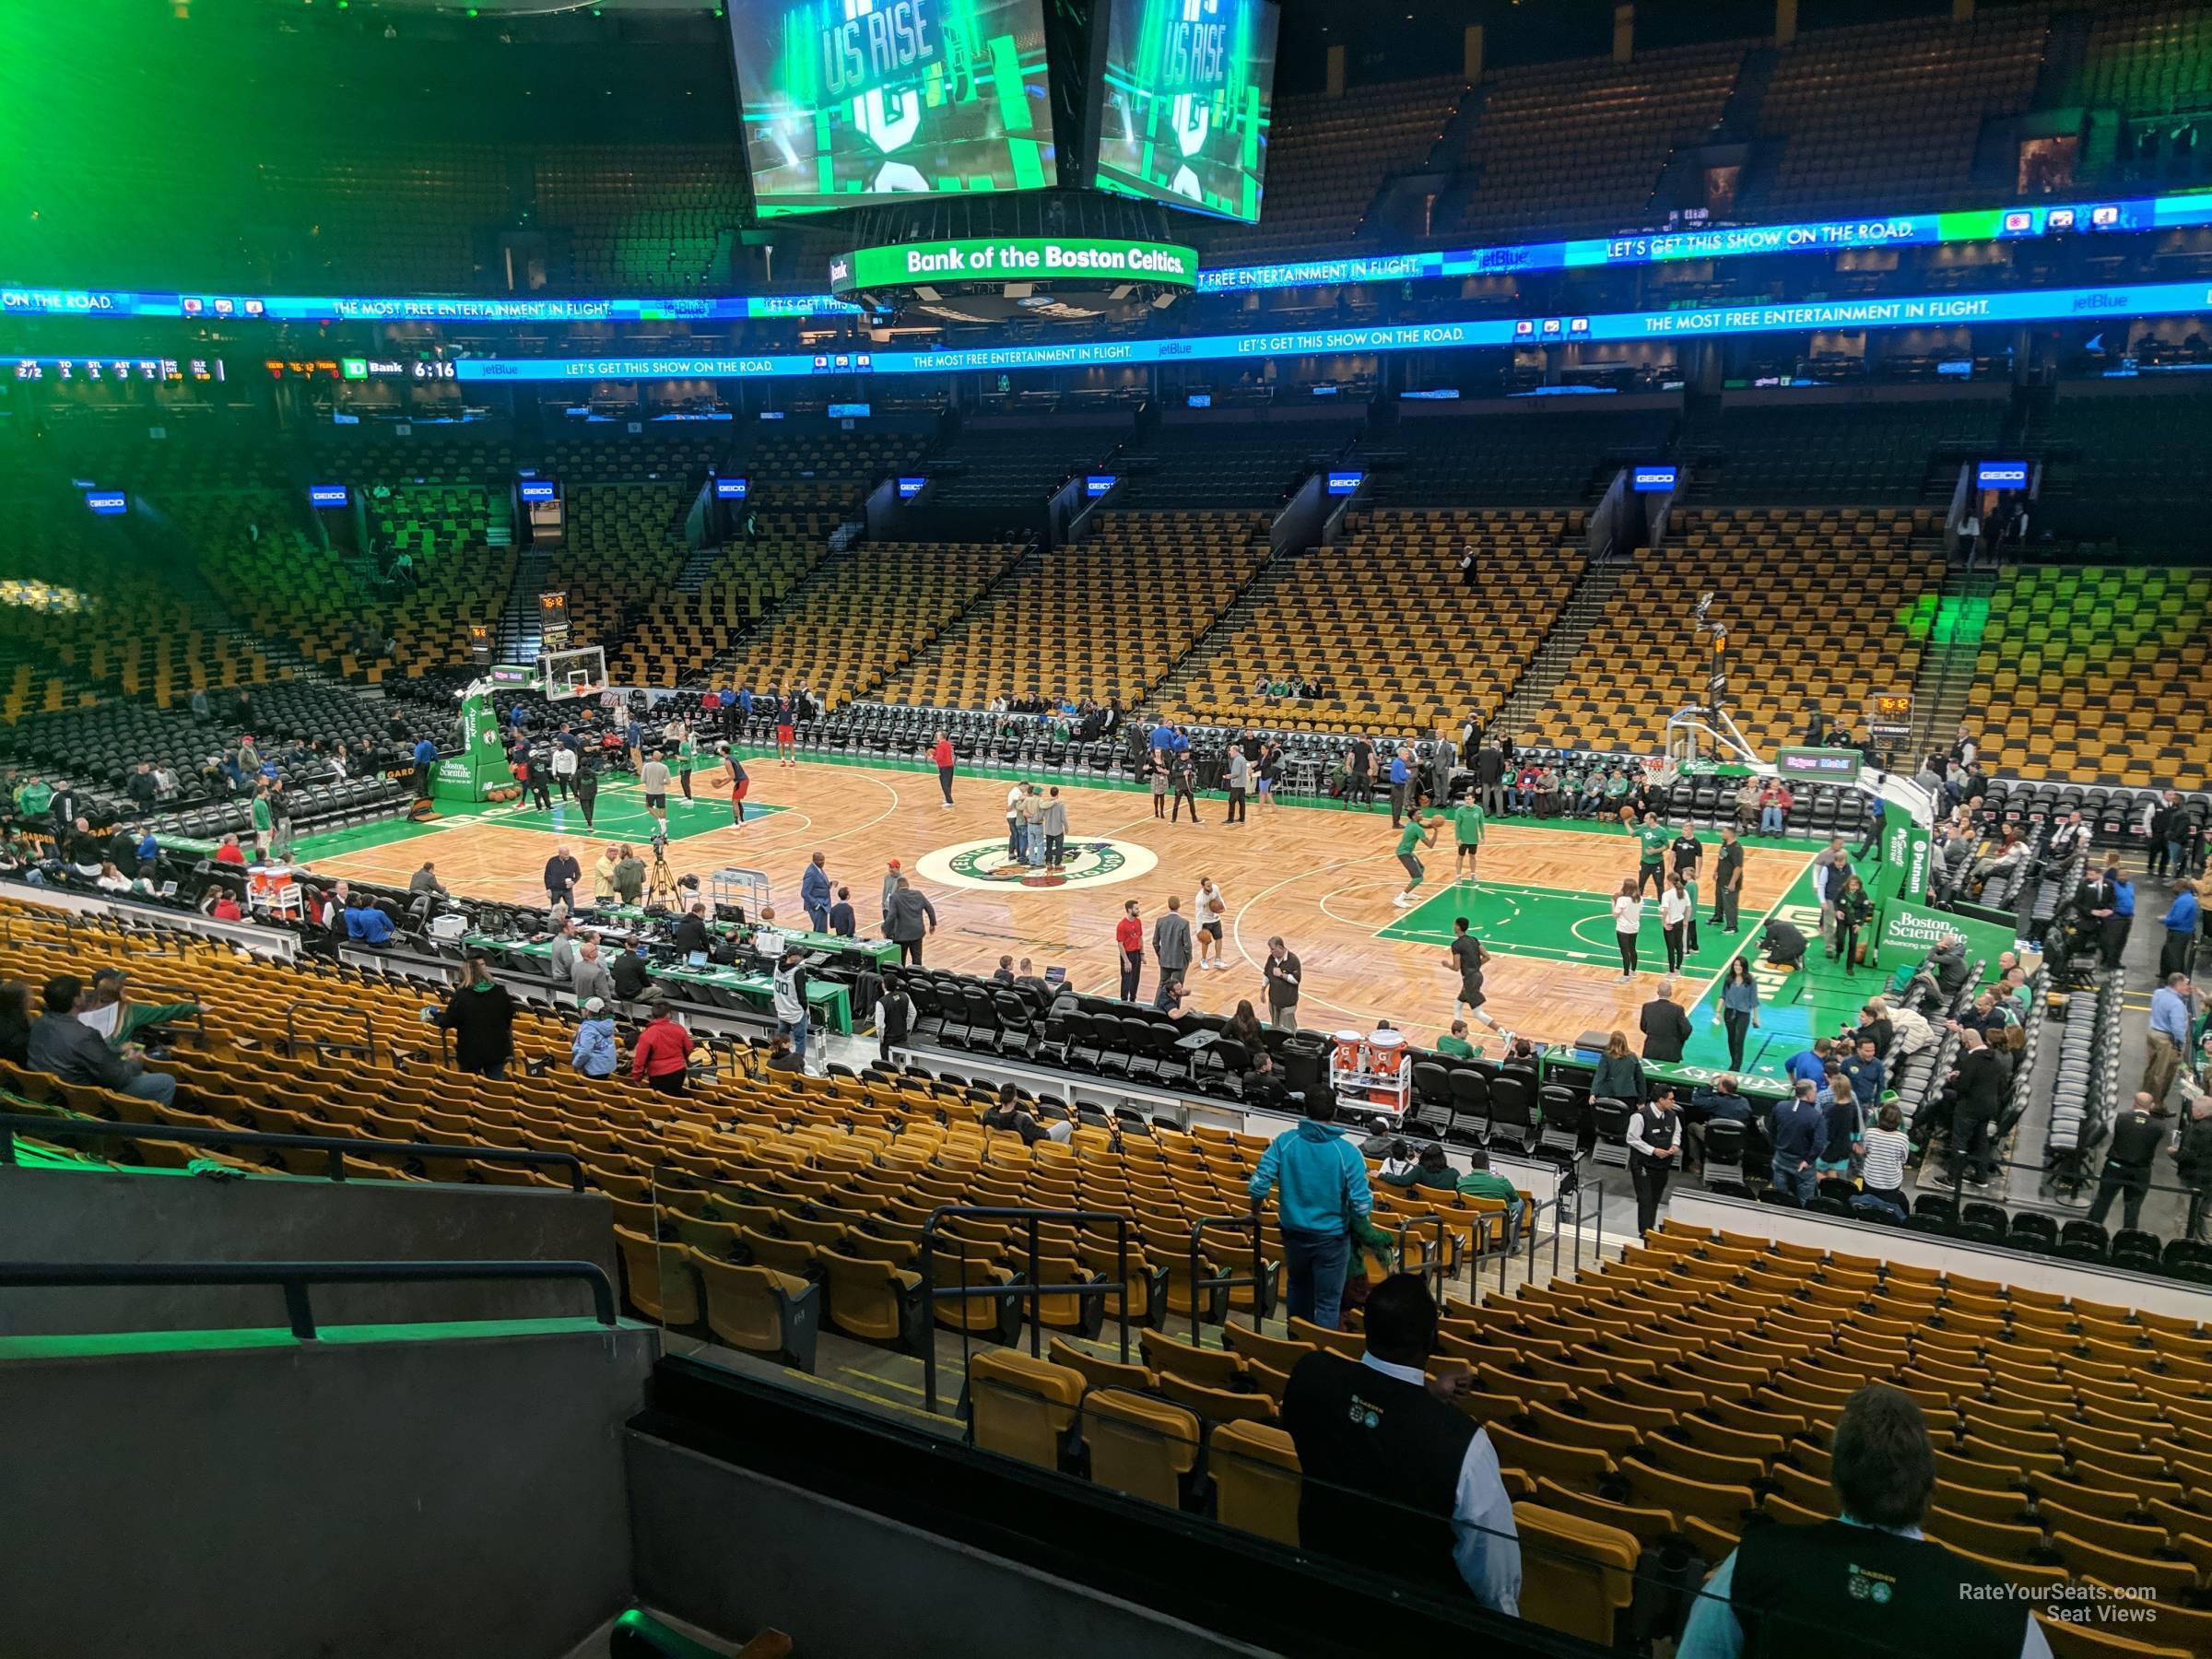 Td Garden Section 107 Boston Celtics Rateyourseats Com